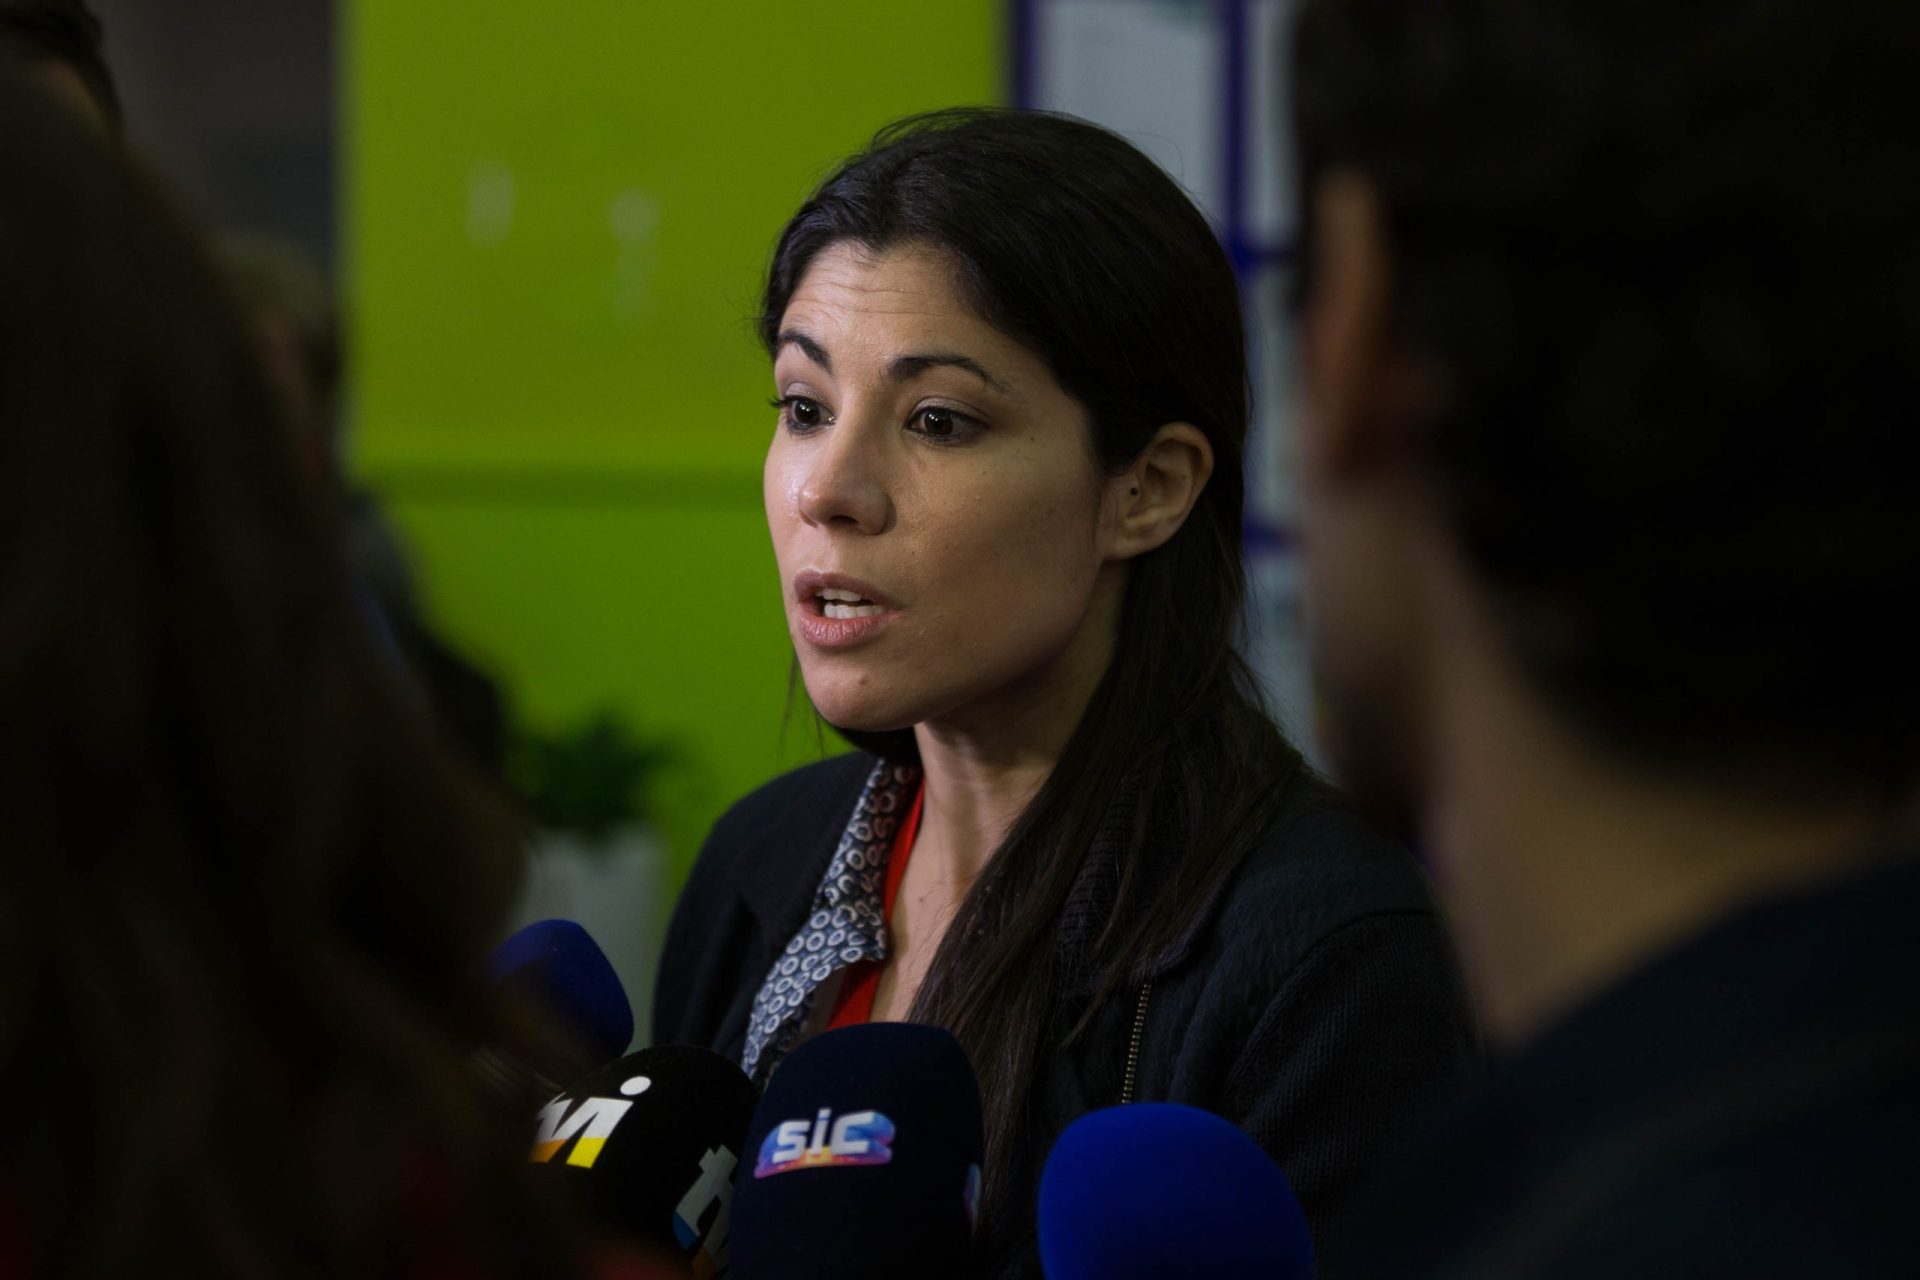 “Só se pode esperar o pior”. Mariana Mortágua critica novo Governo